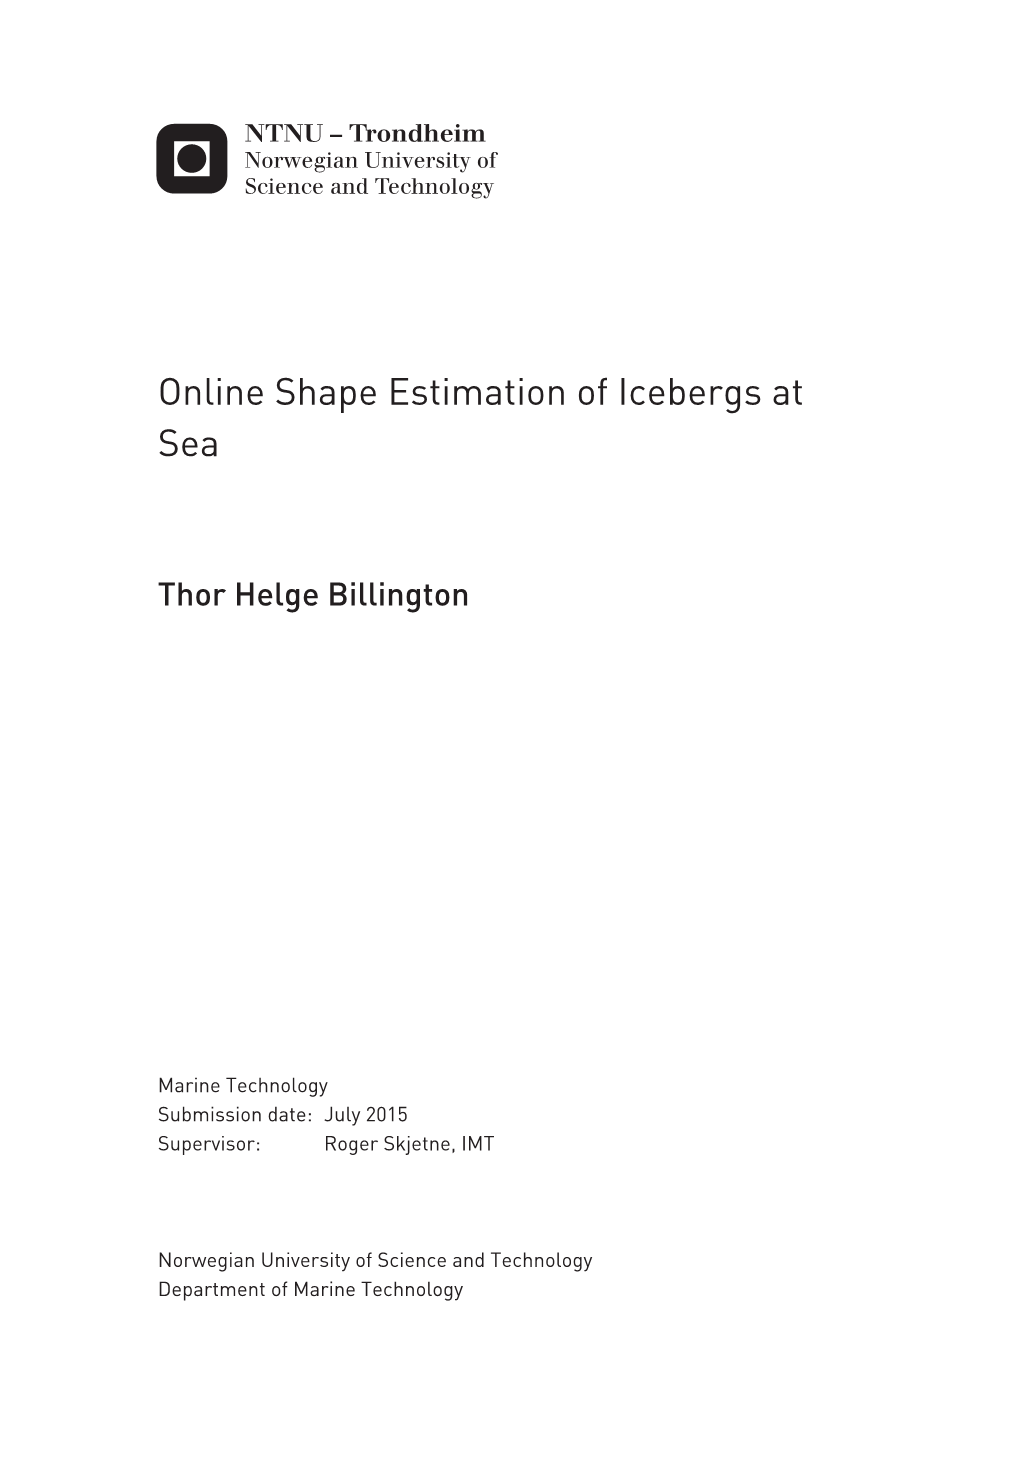 Online Shape Estimation of Icebergs at Sea